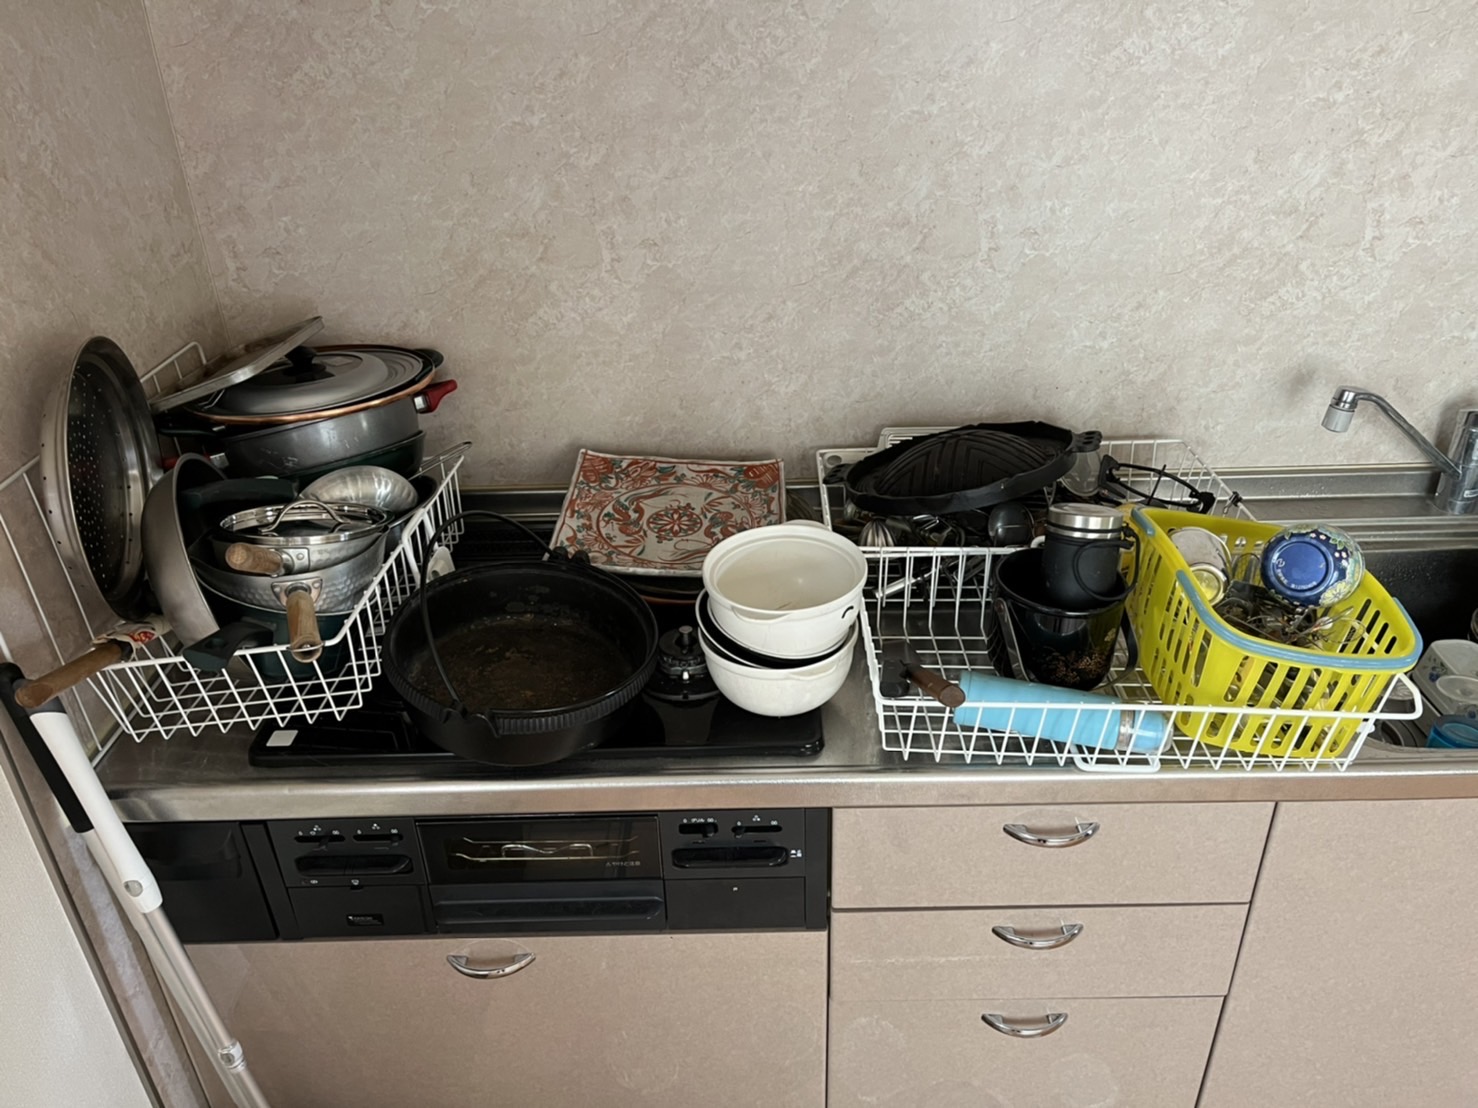 tidying up the kitchen-pot-frying pan-disposal